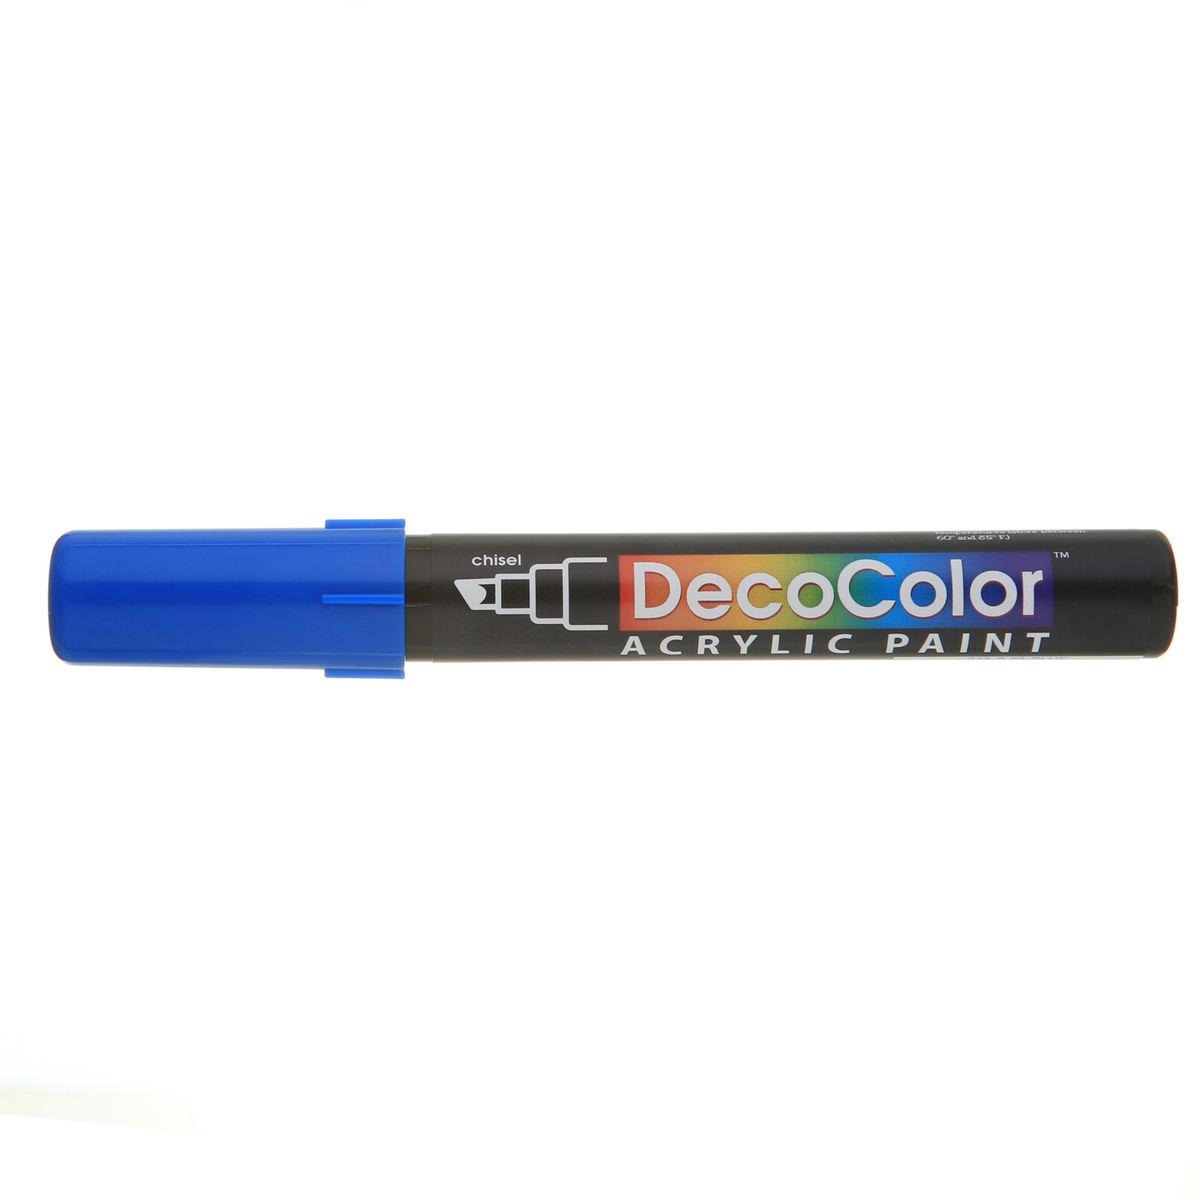 RDY 送料無料 ウチダ デコカラーアクリルペイントマーカー チゼル ブルー 楽天海外通販 Uchida DecoColor Acrylic Paint Marker, Chisel, Blue